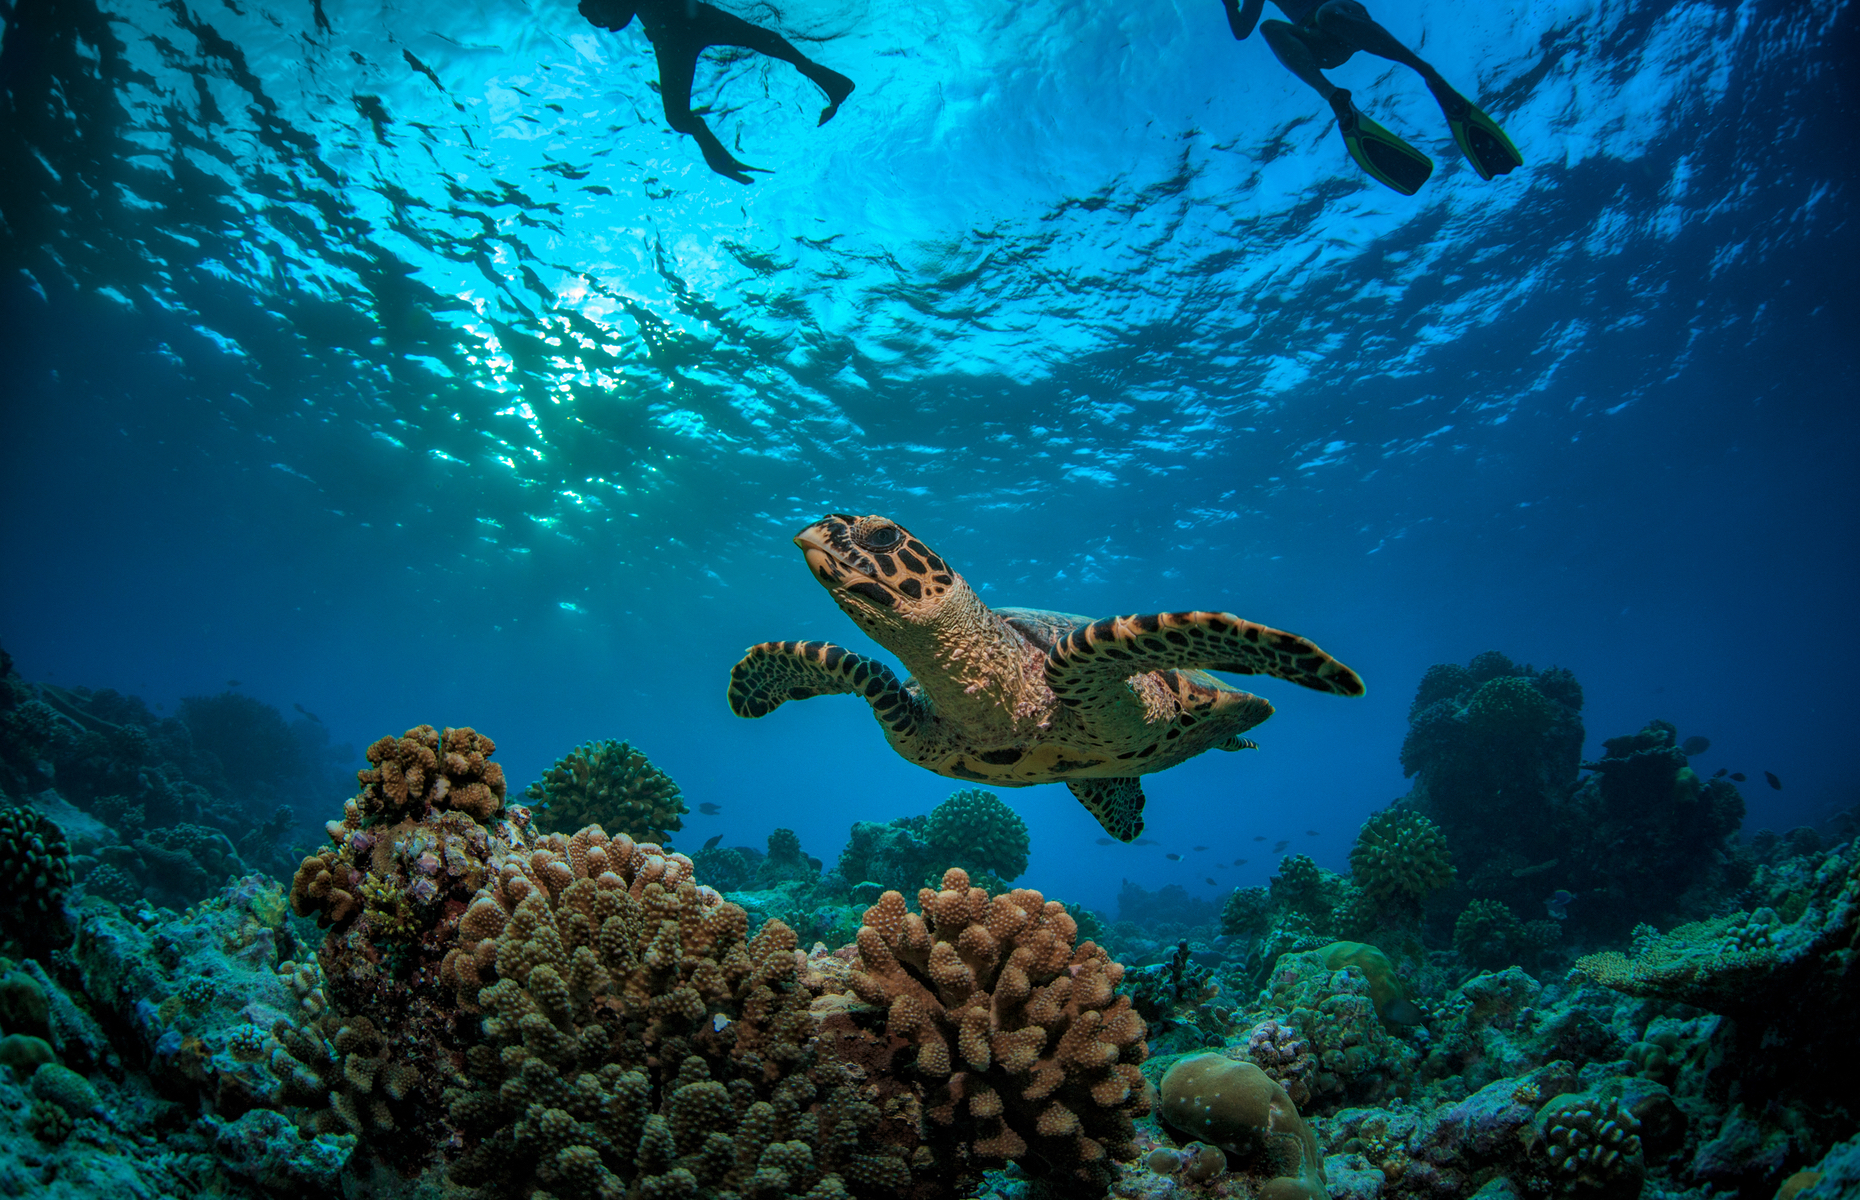 Underwater Seychelles turtle and snorkellers (Image: Willyam Bradberry/Shutterstock)